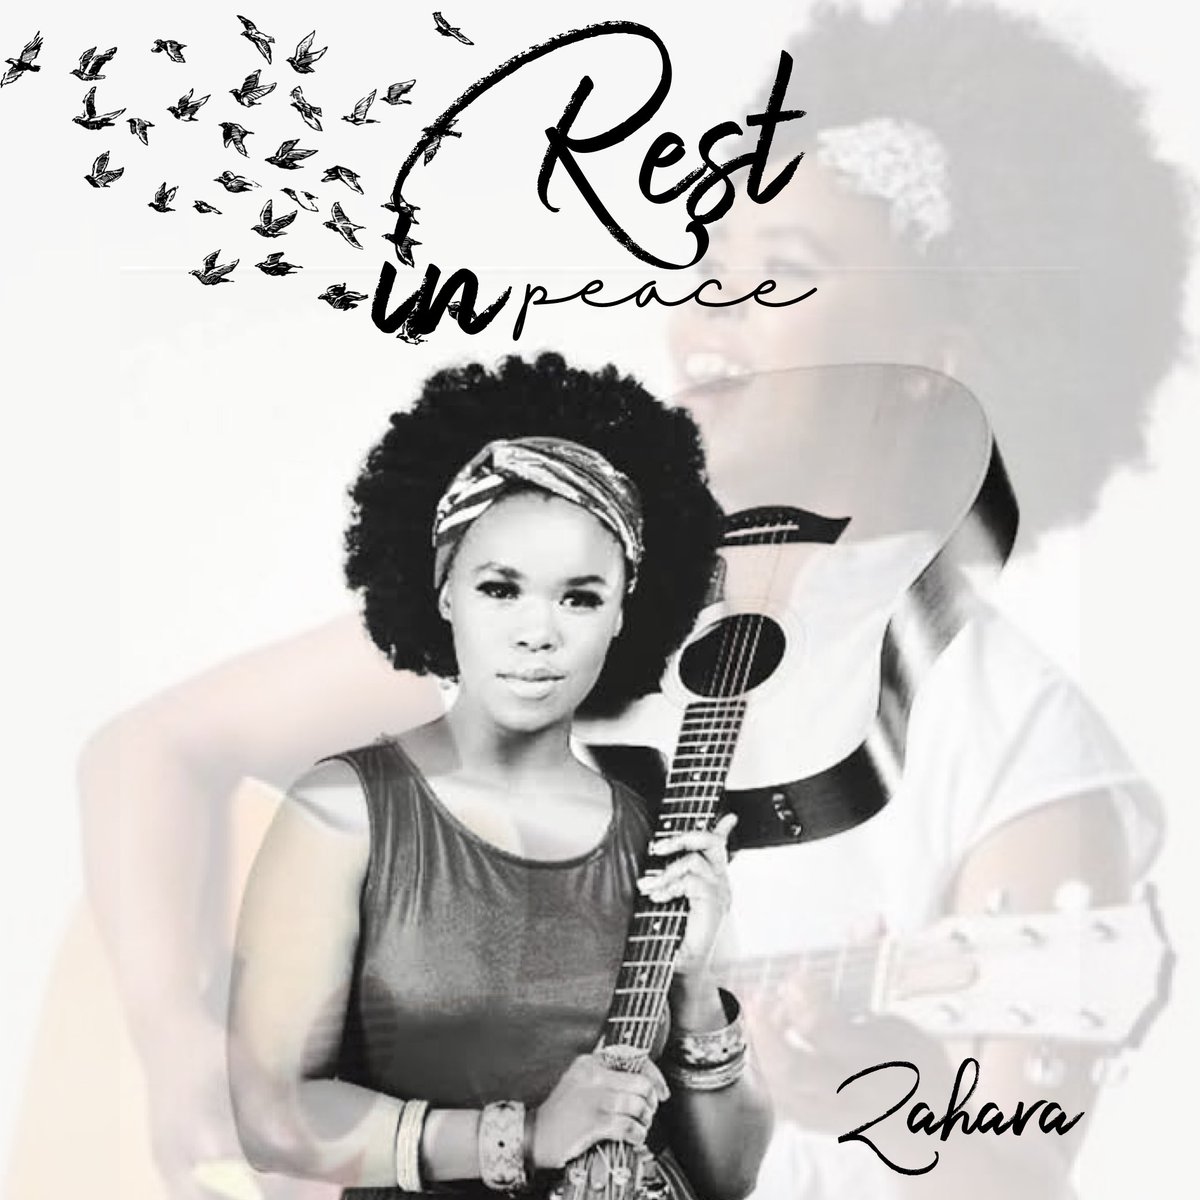 Rest in peace Zahara

#RIPZahara #restinpeace #rip #bulelwamkutukana #wasitworthit #xhosa #artist #singer #vocalist